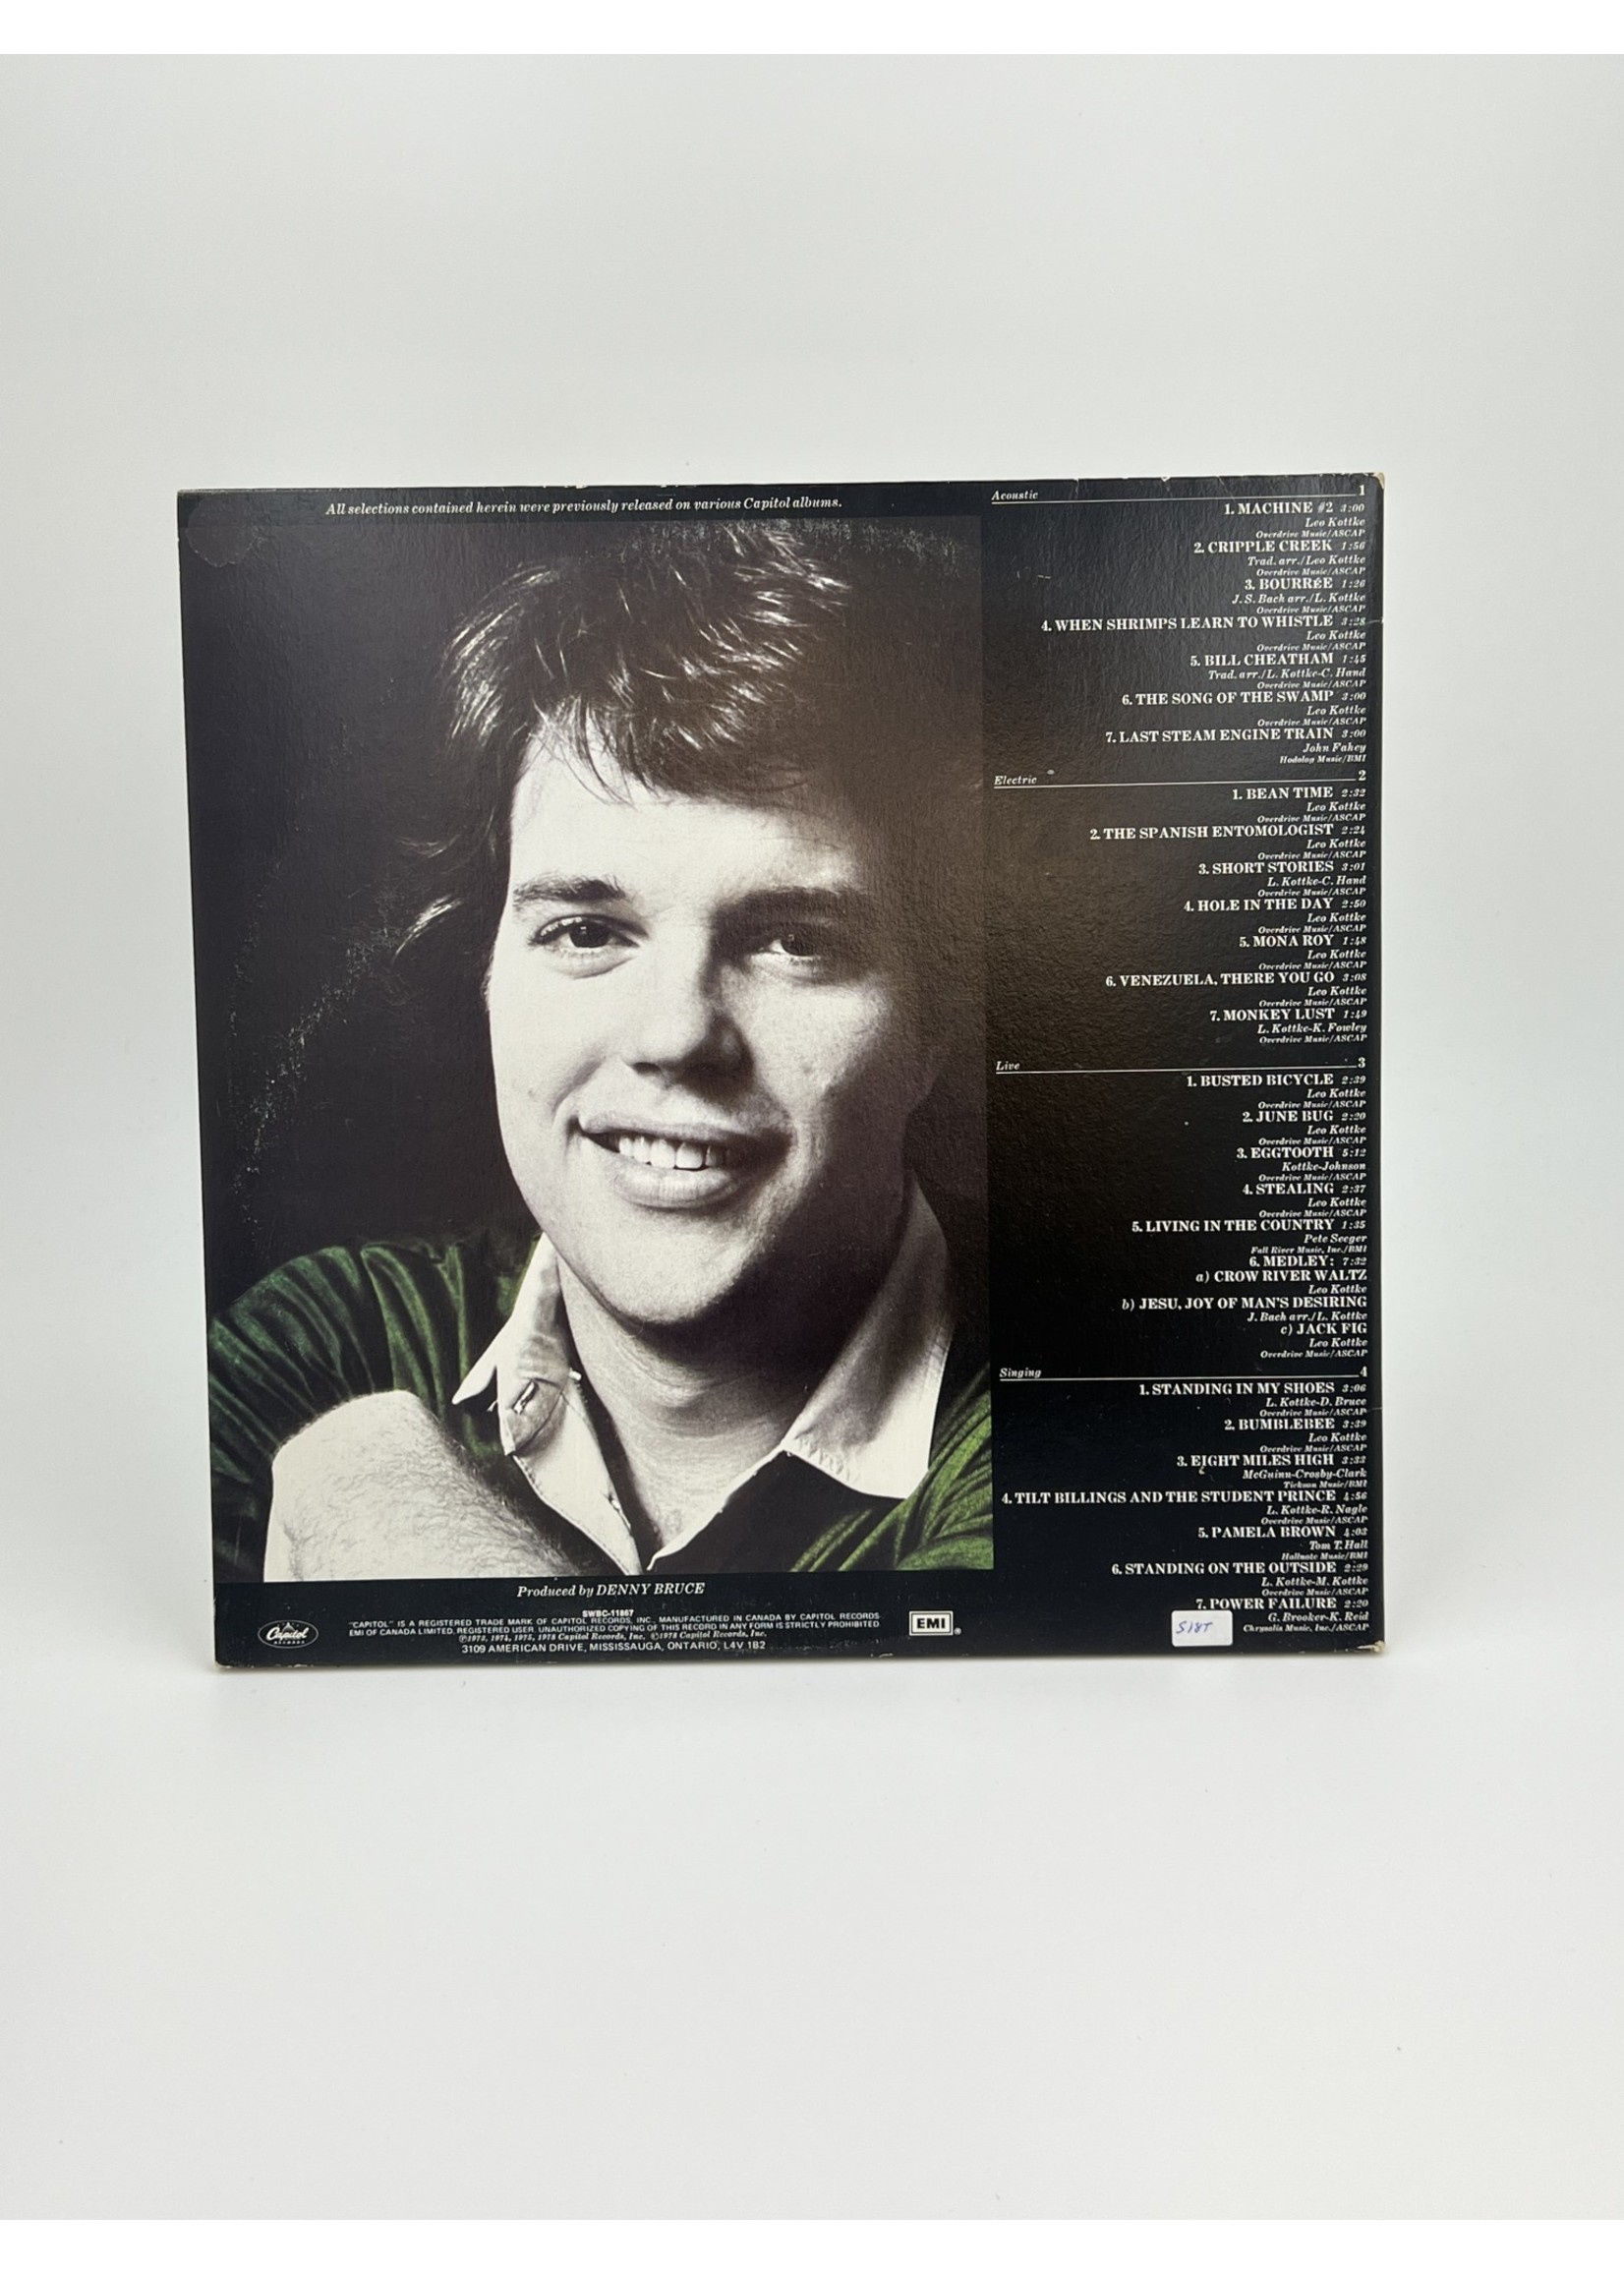 LP Leo Kottke The Best LP Record